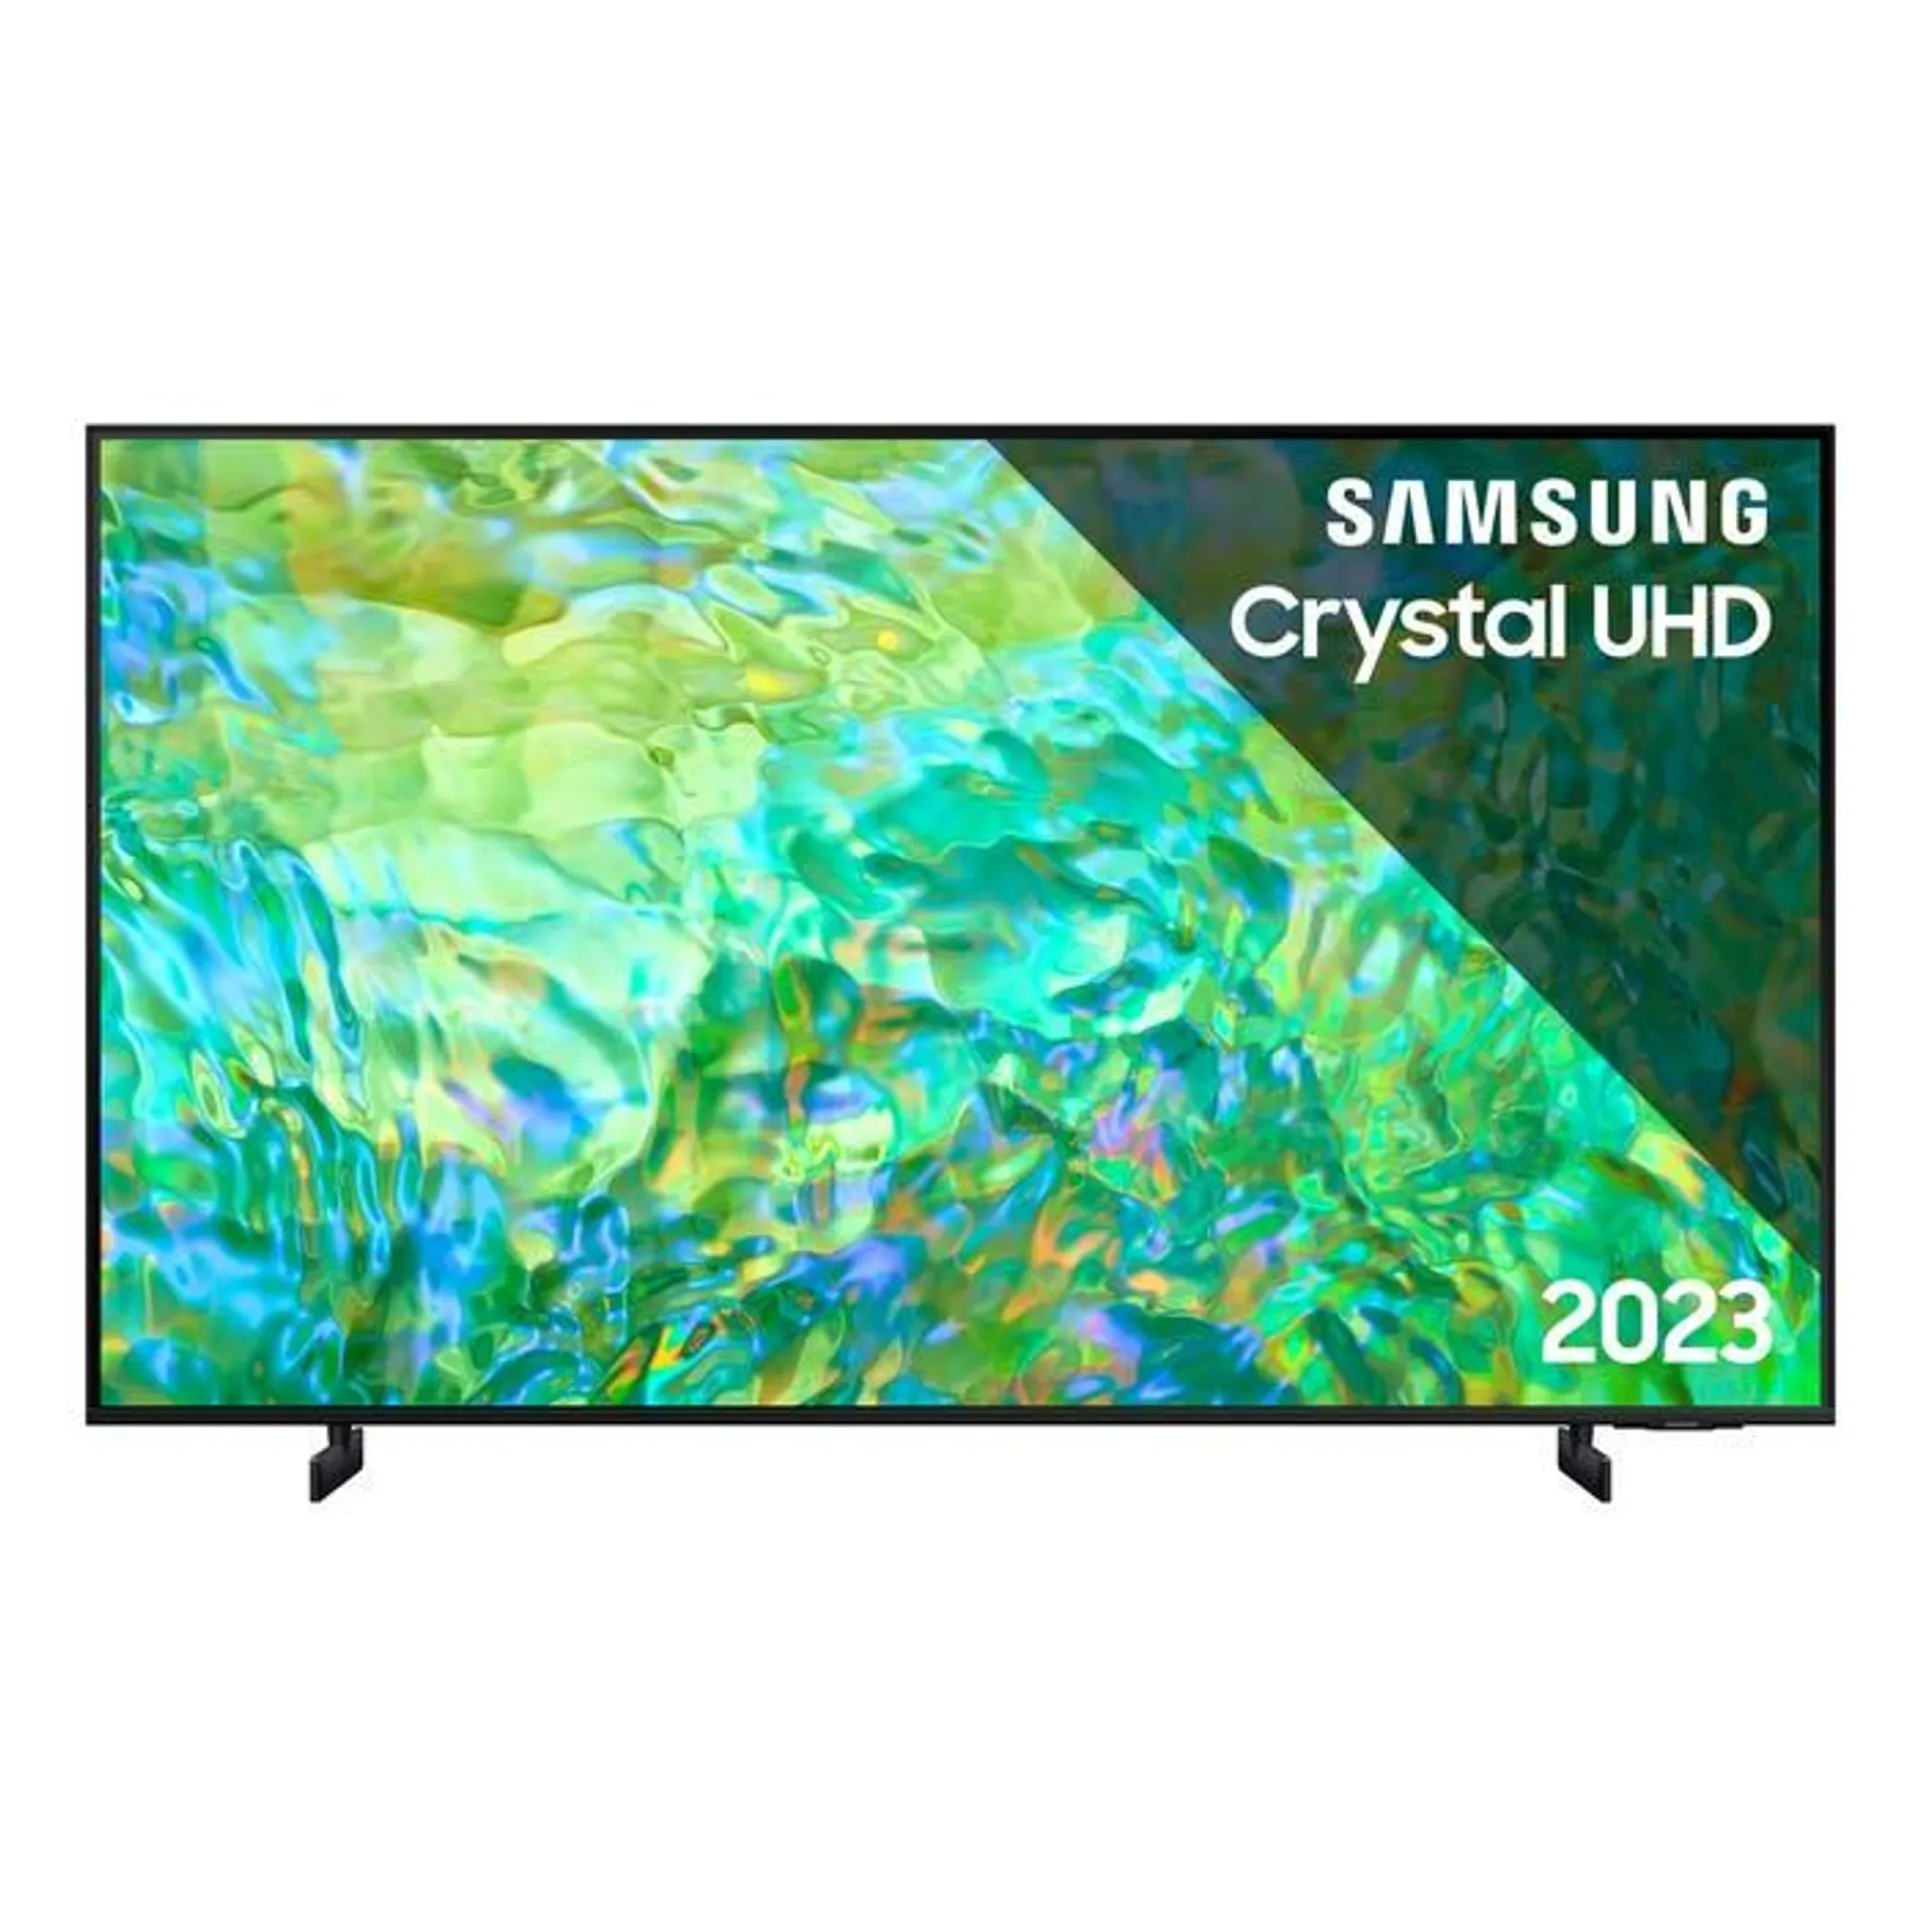 Samsung 43 INCH CRYSTAL UHD SMART TV CU8070 (2023)